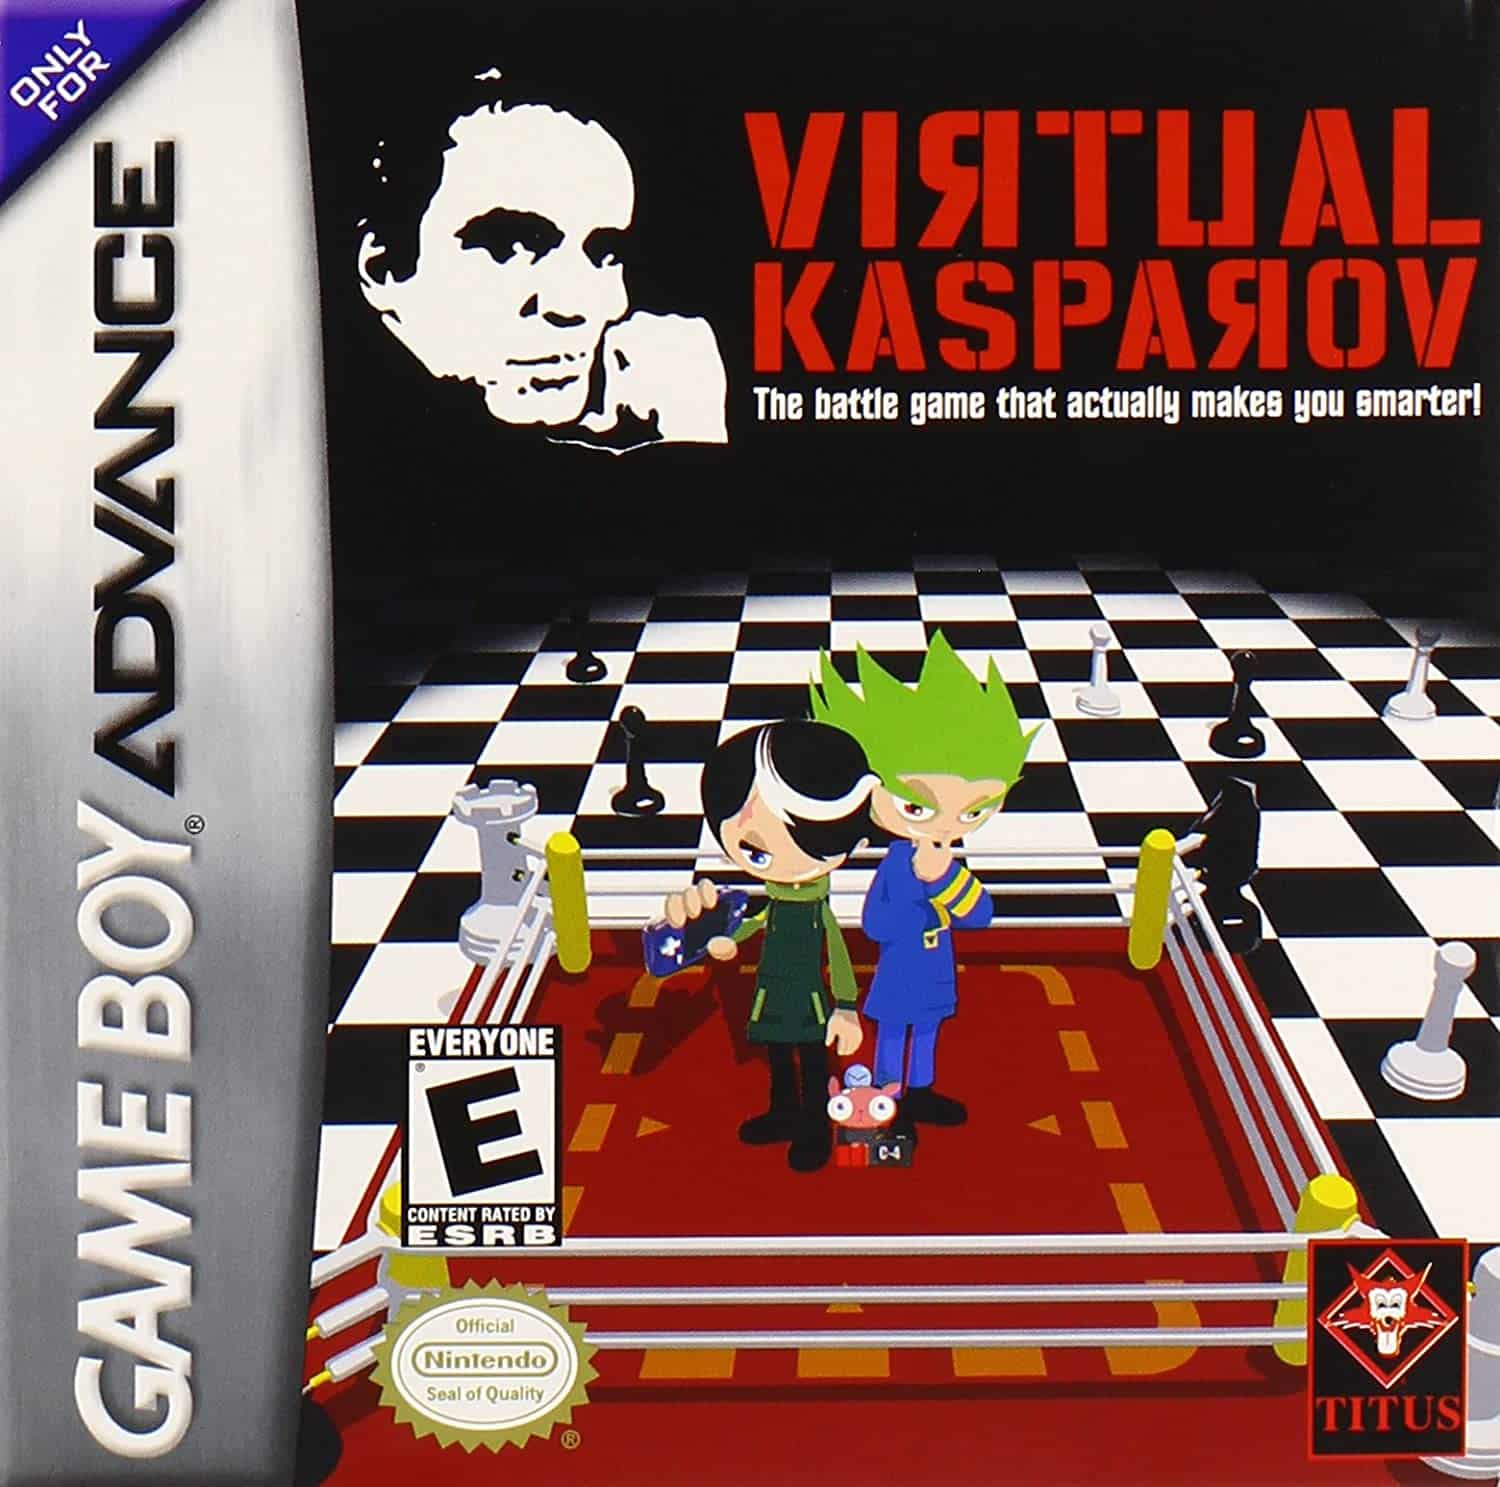 Virtual Kasparov player count stats